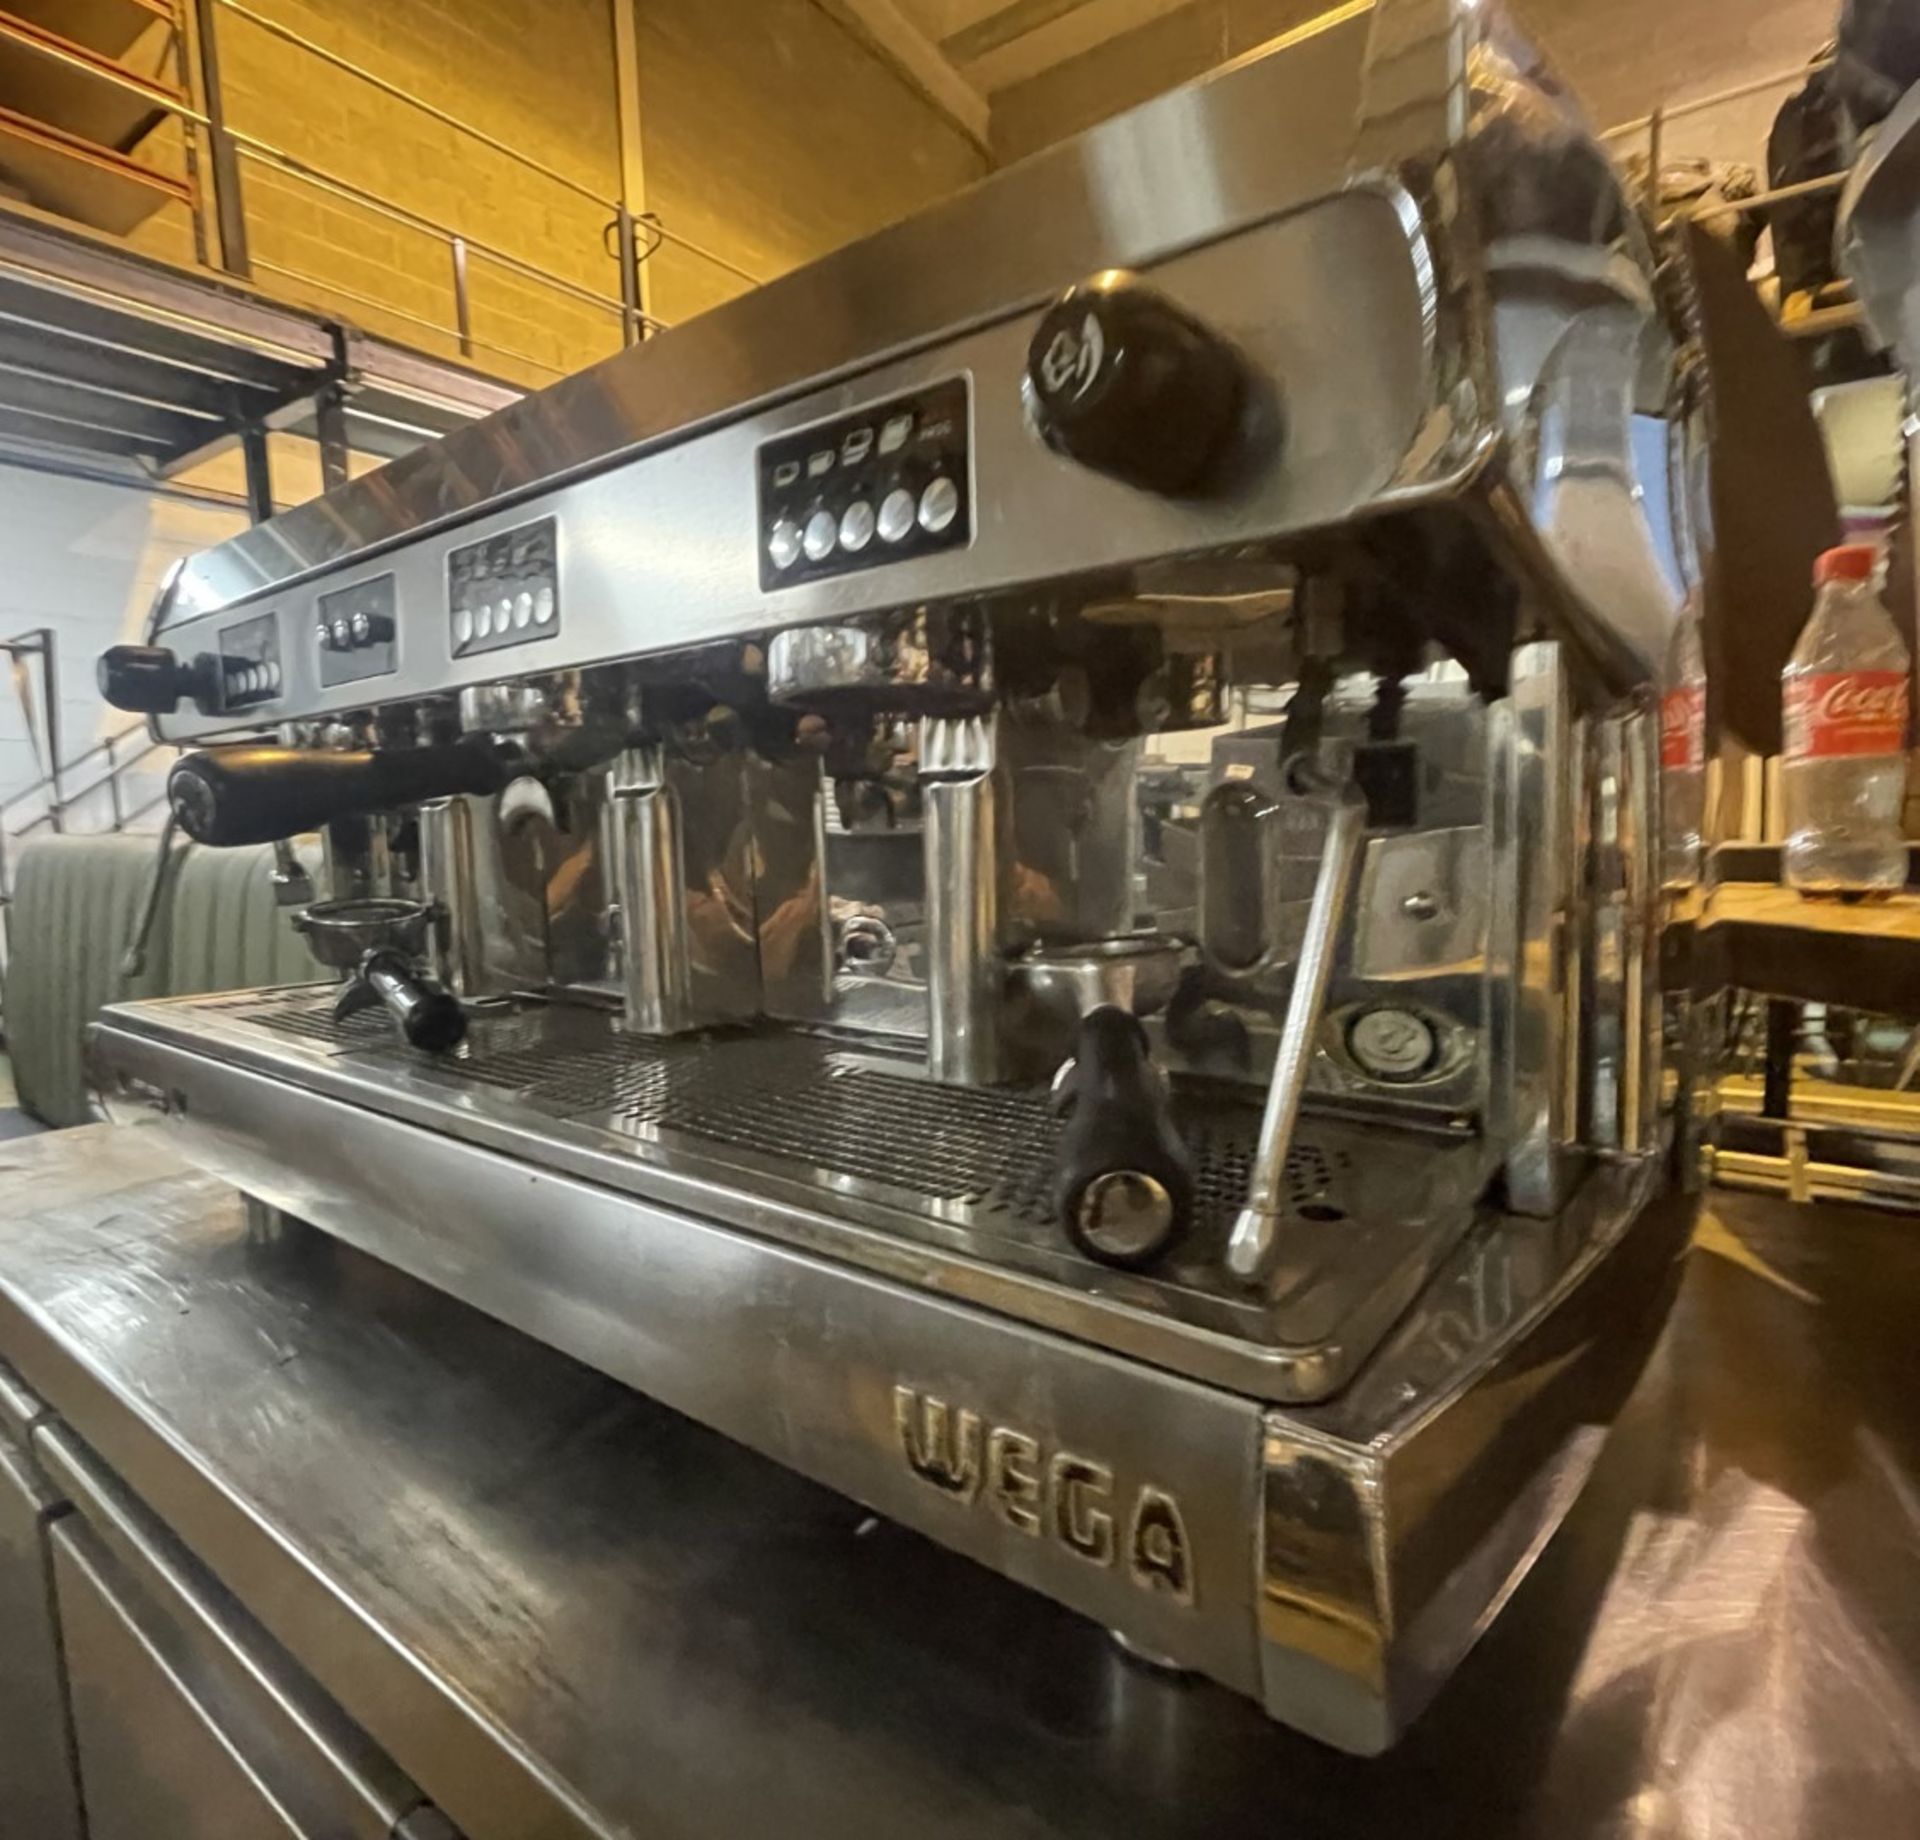 1 x Polaris Wega 3 Group Commercial Espresso Coffee Machine - Stainless Steel Exterior - 3 Phase